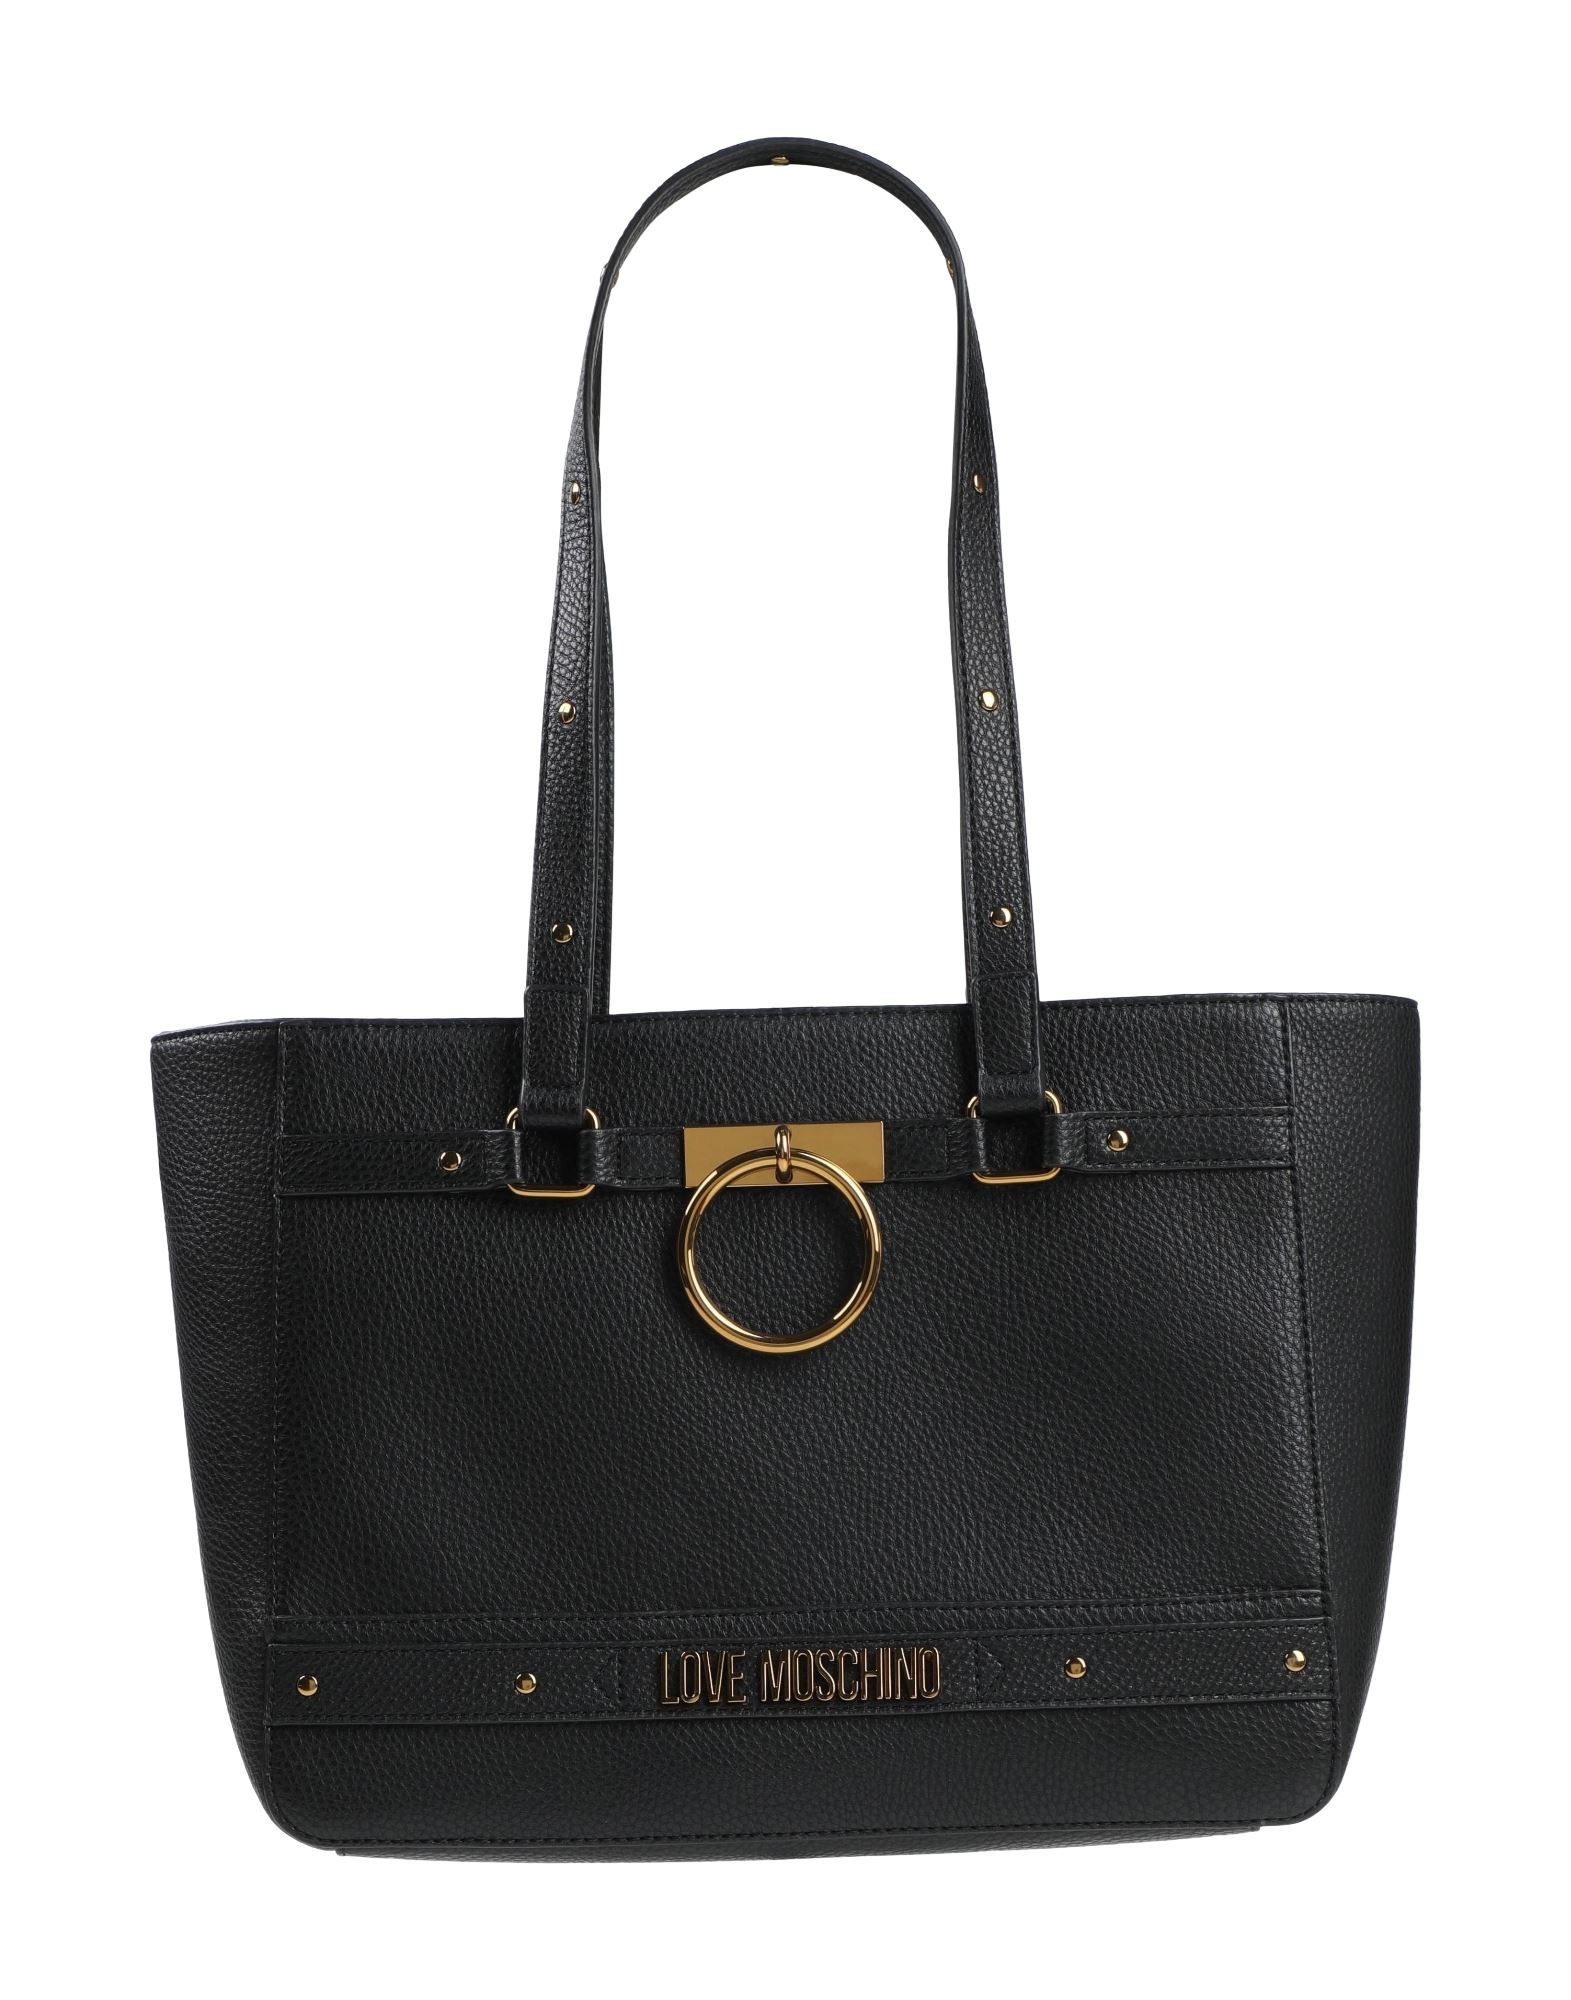 LOVE MOSCHINO Handbags - Item 45553326